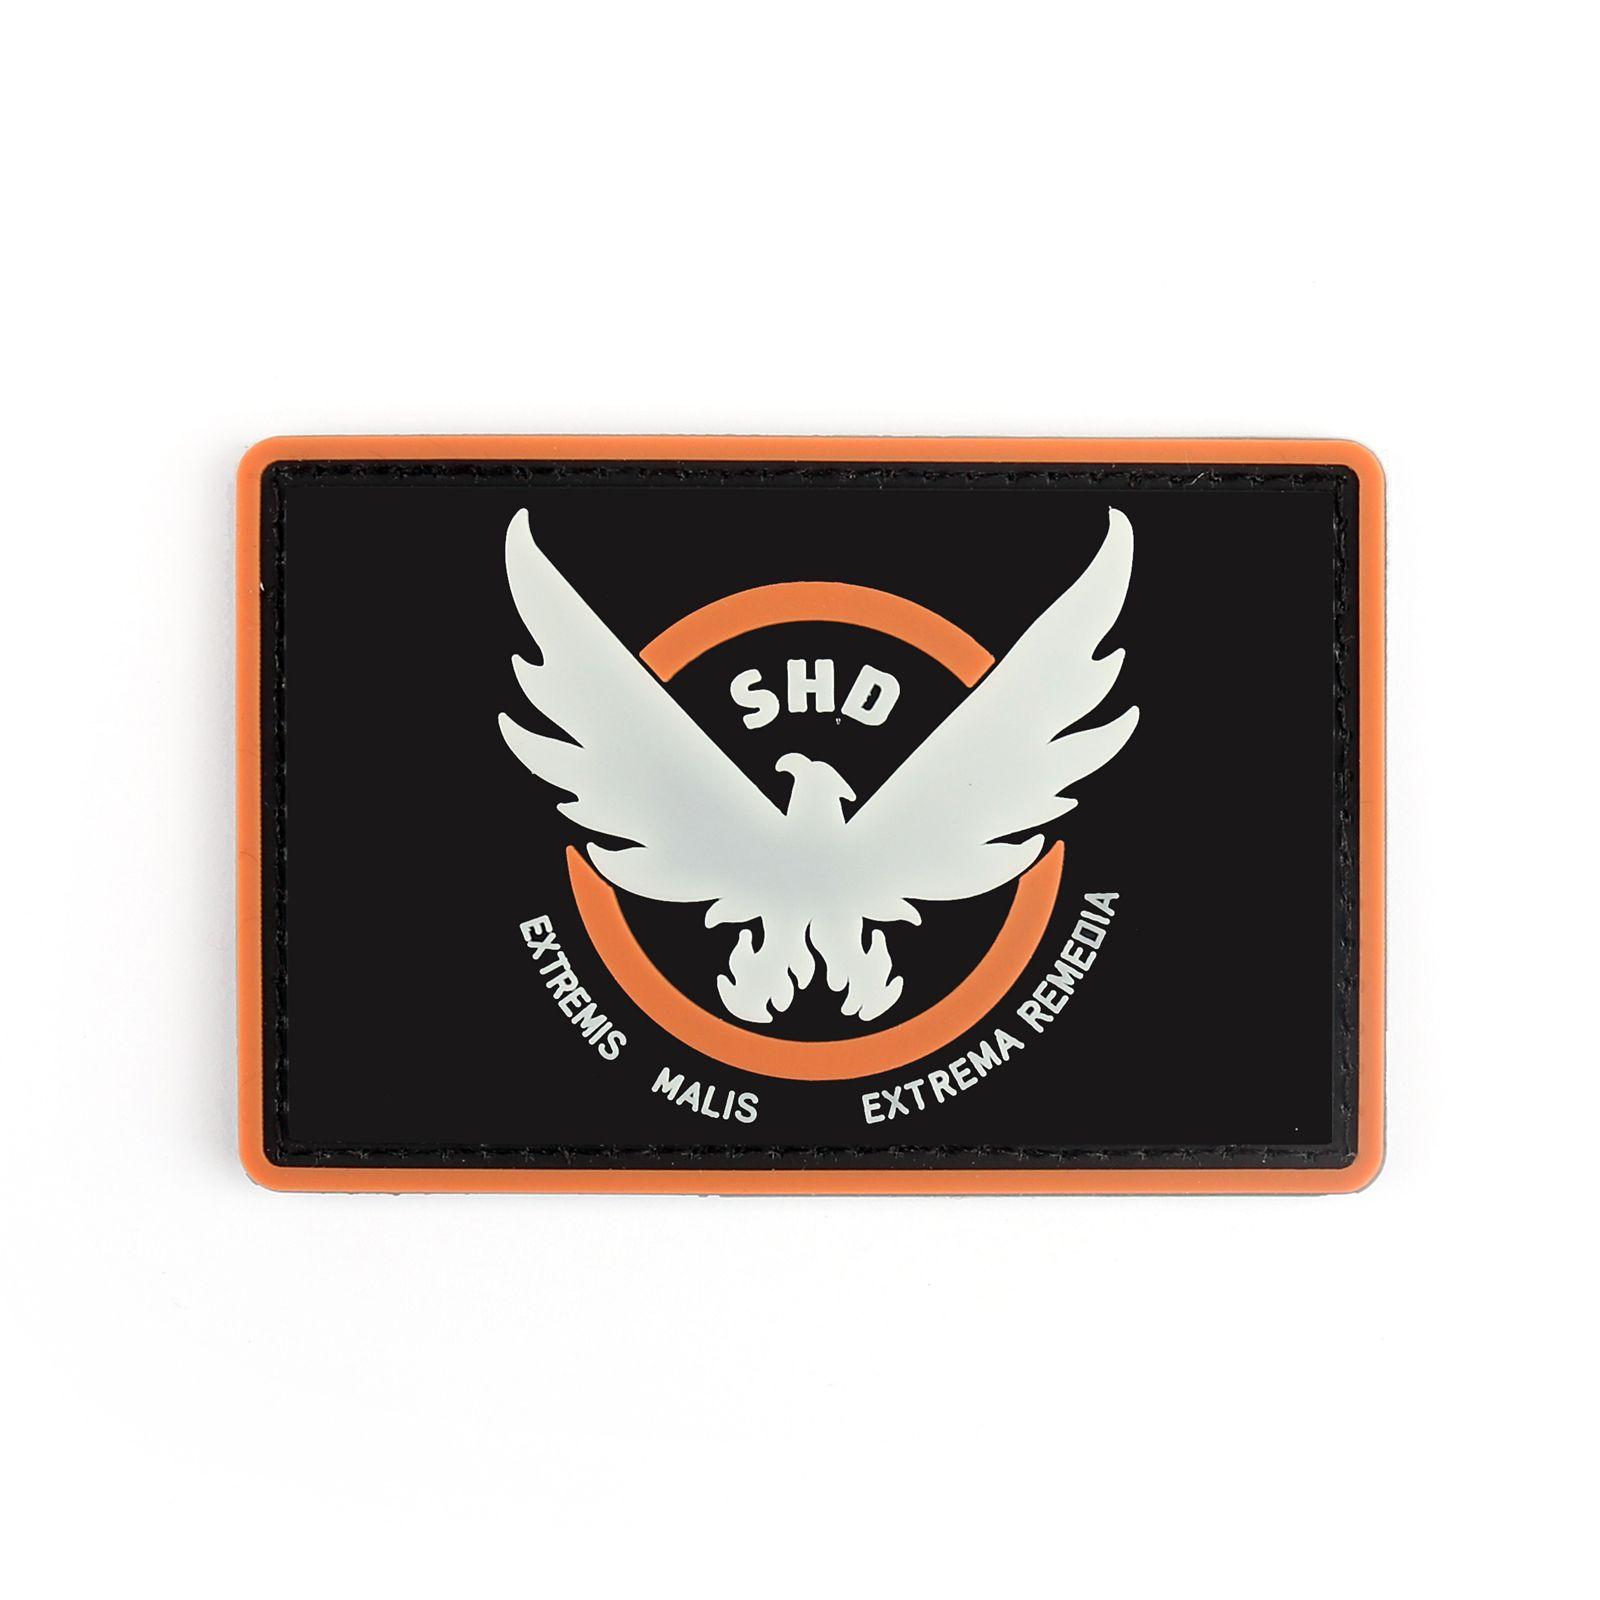 The Division Shd Logo - 10*6.5CM Tom Clancy's The Division Agent SHD logo PVC Hook Loop ...